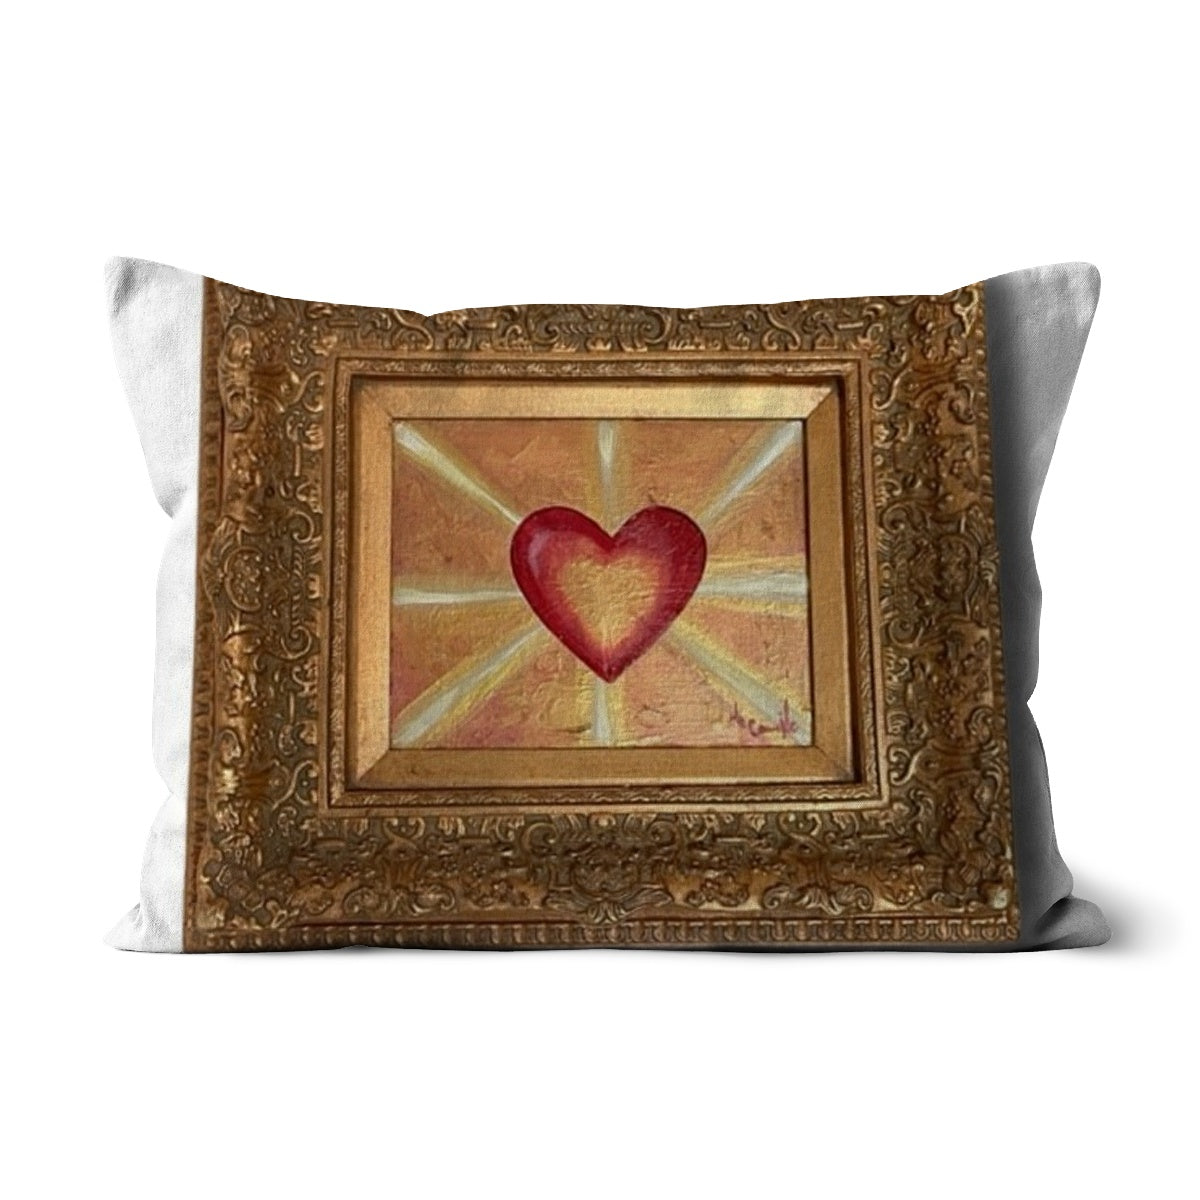 'Divine Heart Illumination' Cushion